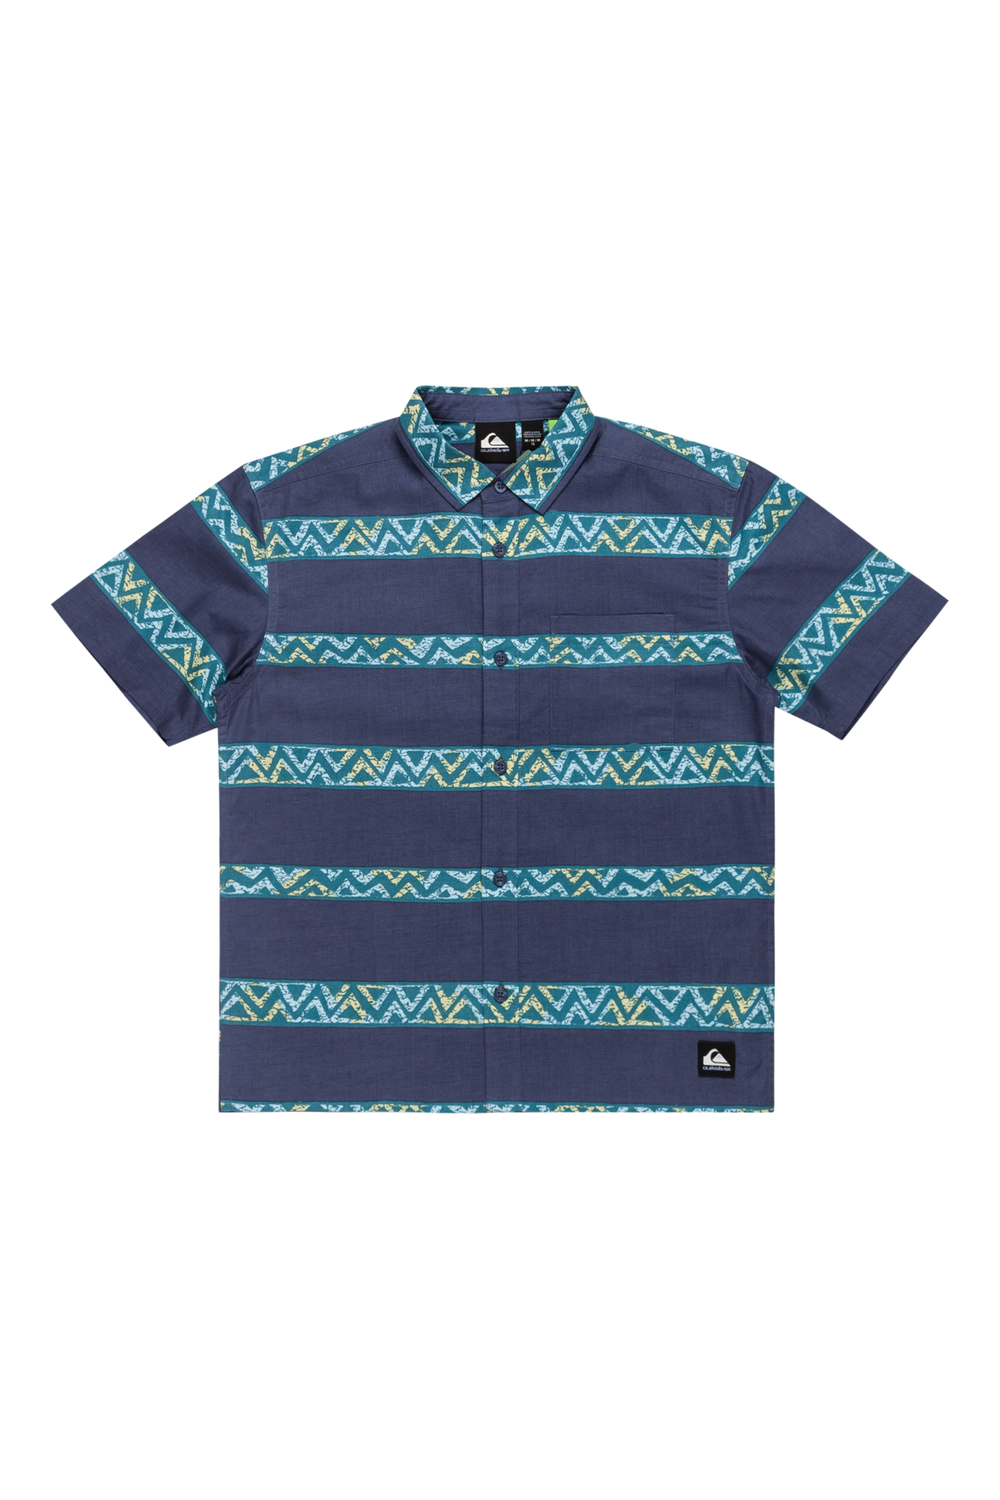 Quiksilver Dalnavert Short Sleeve Shirt Youth Crown Blue Heritage Stripe